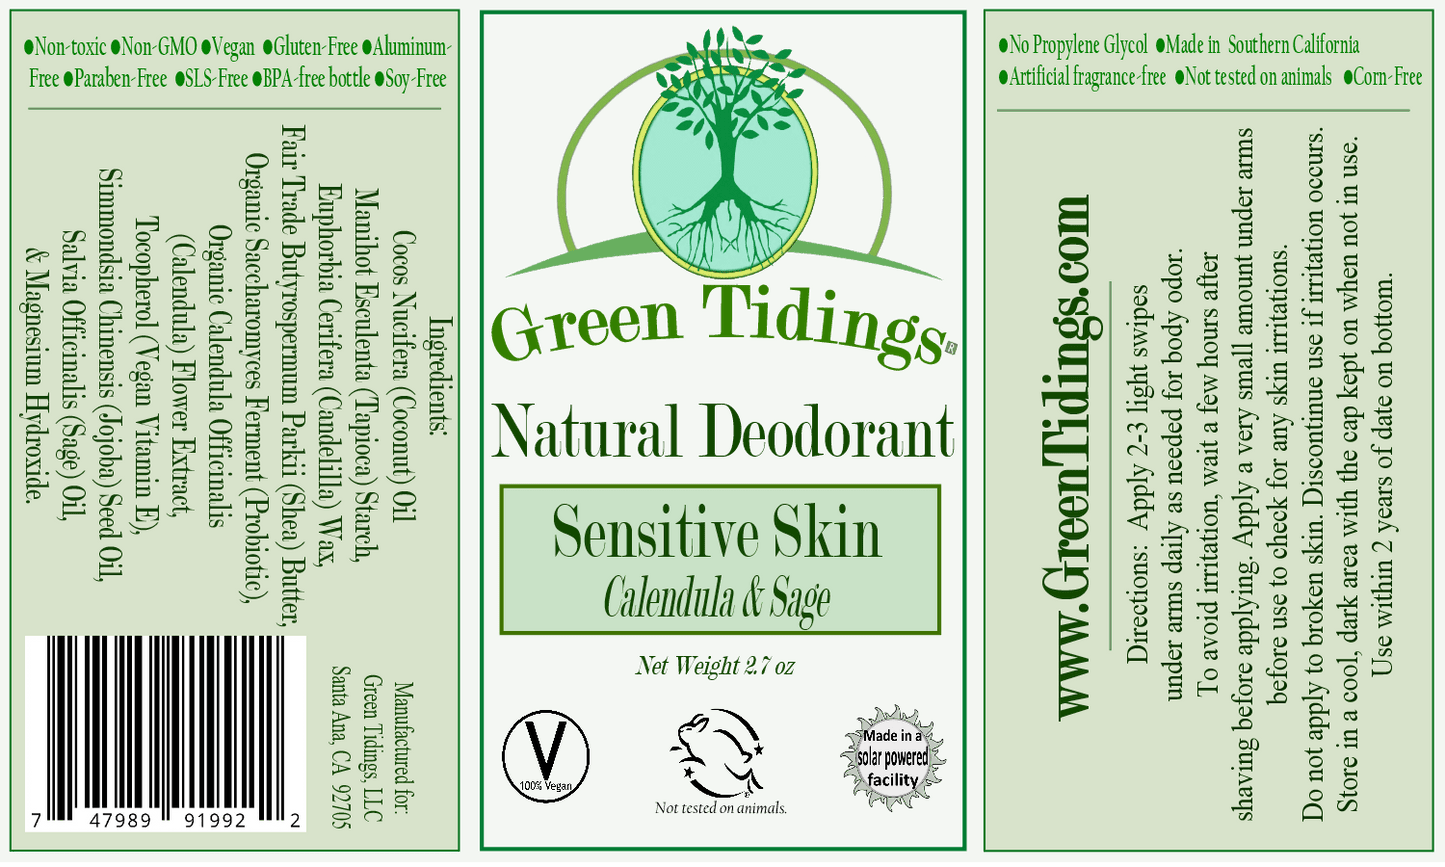 Sensitive Skin Natural Deodorant, Calendula & Sage (1 Ounce) (No Baking Soda) - Green Tidings